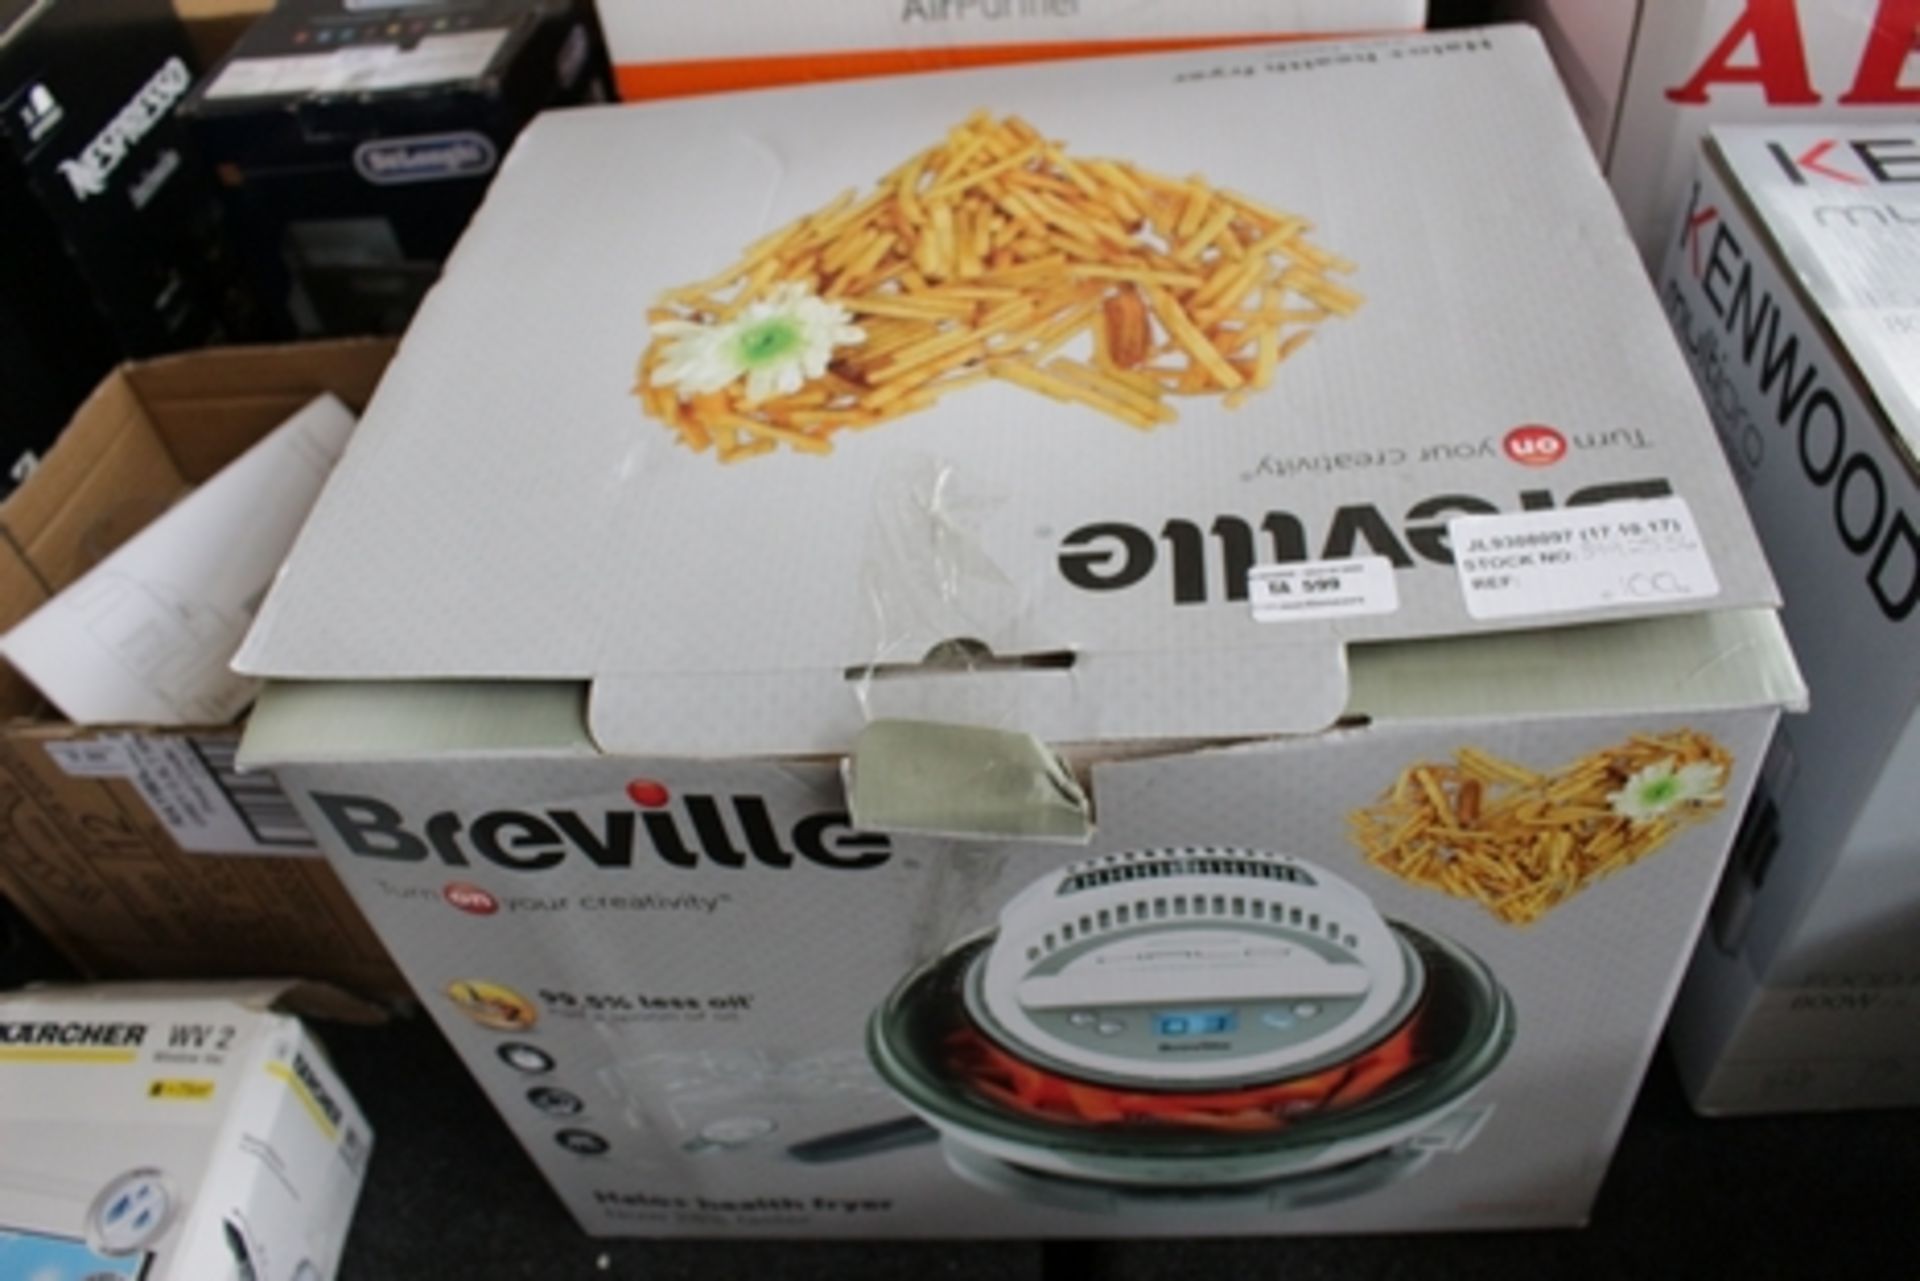 1X BOXED BREVILLE HALO PLUS HEALTH FRYER RRP £100 (JL-9308097) (17/10/17) (3792536)